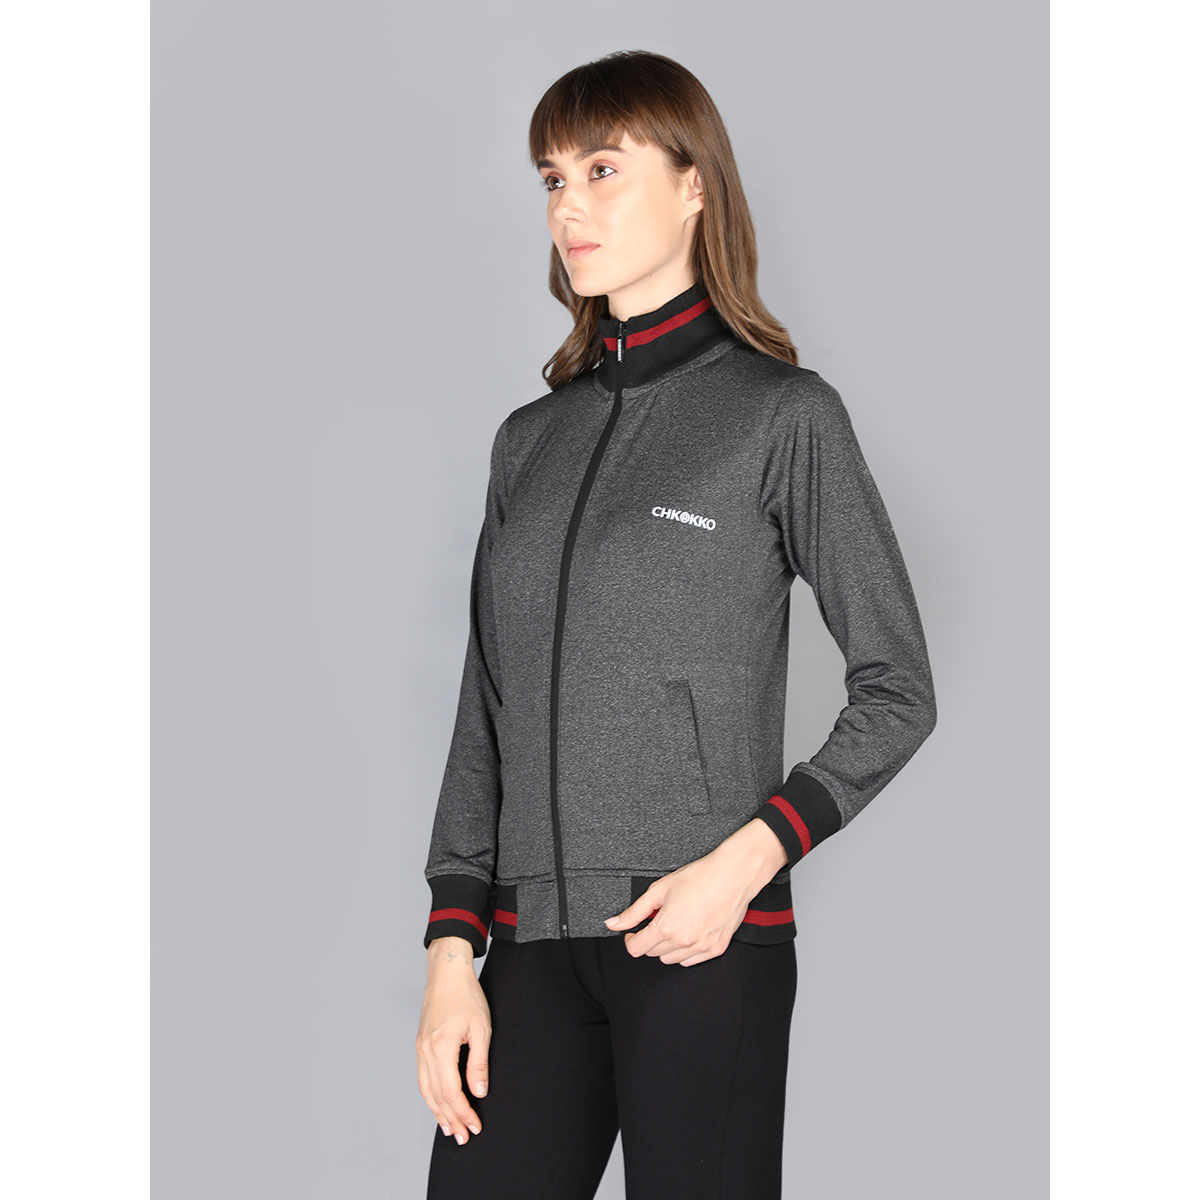 Buy CHKOKKO Women Sports Zipper Jacket -grey Online